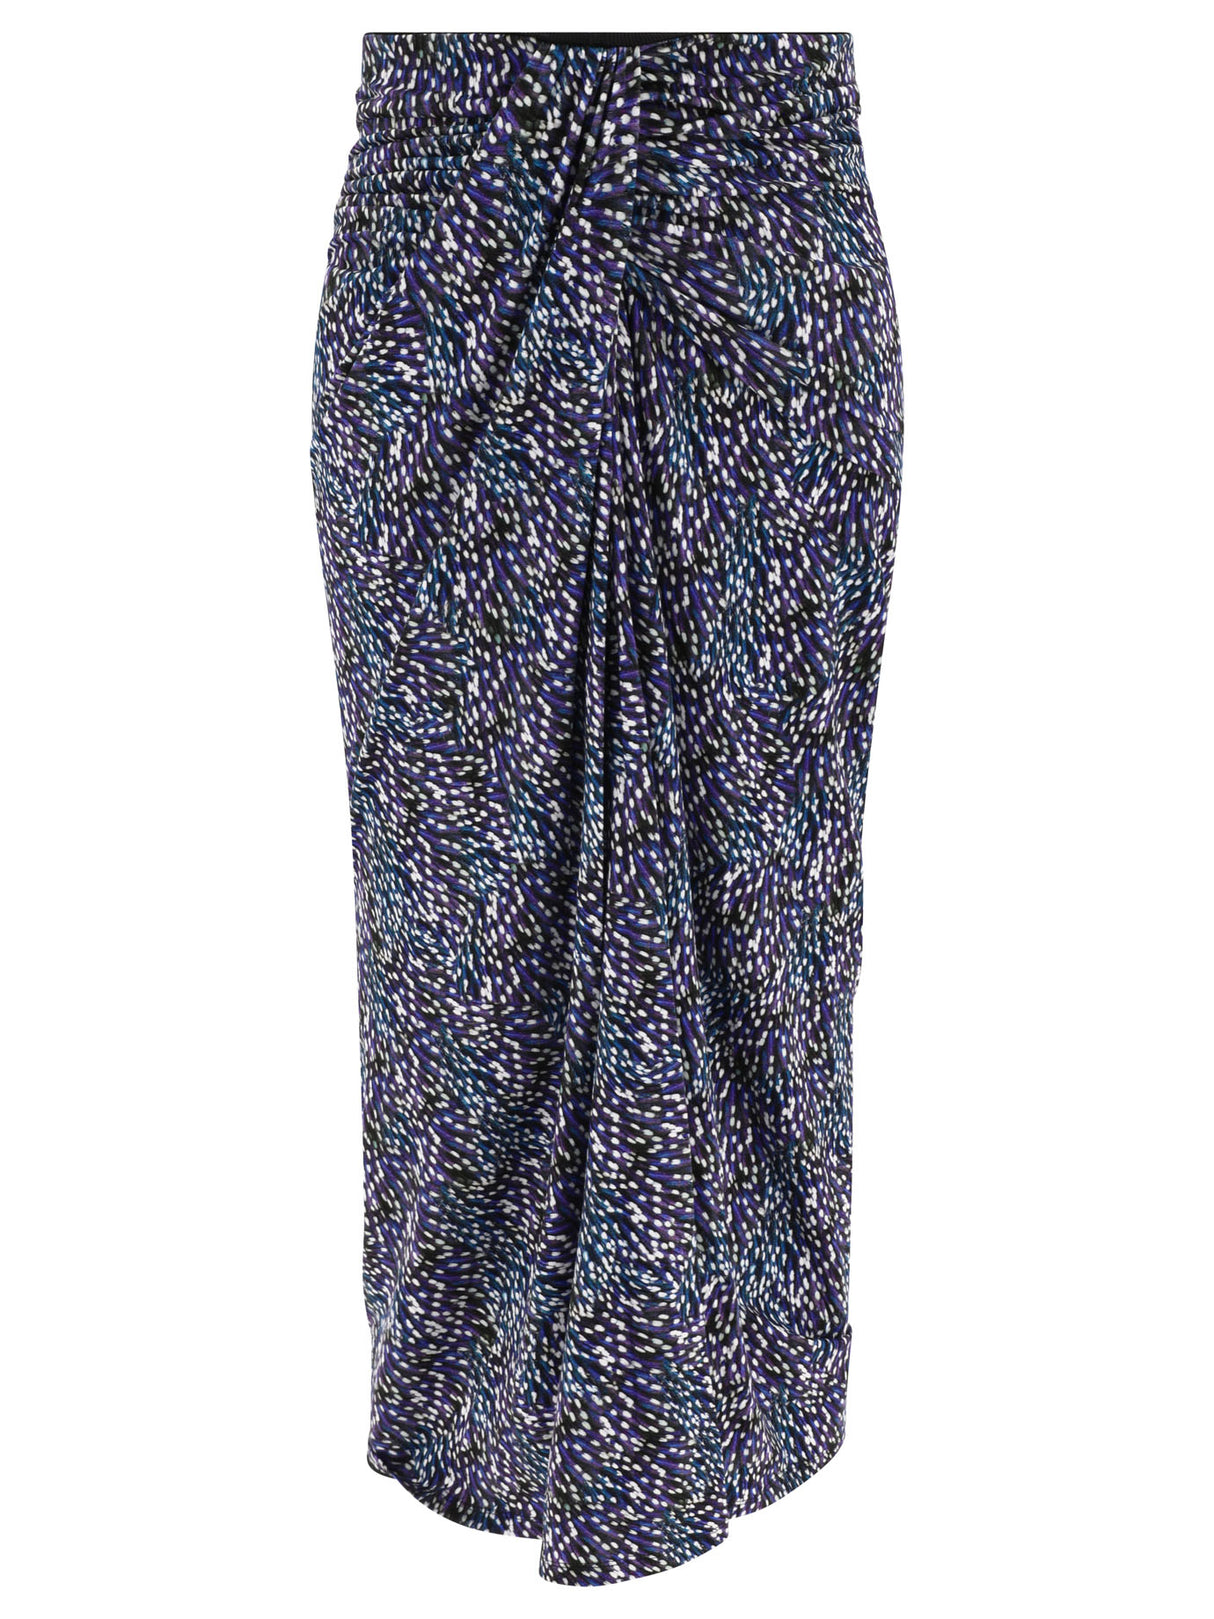 ISABEL MARANT Blue Ruffled Skirt for Women - Slim Fit, Elastic Waist, 95% Viscose